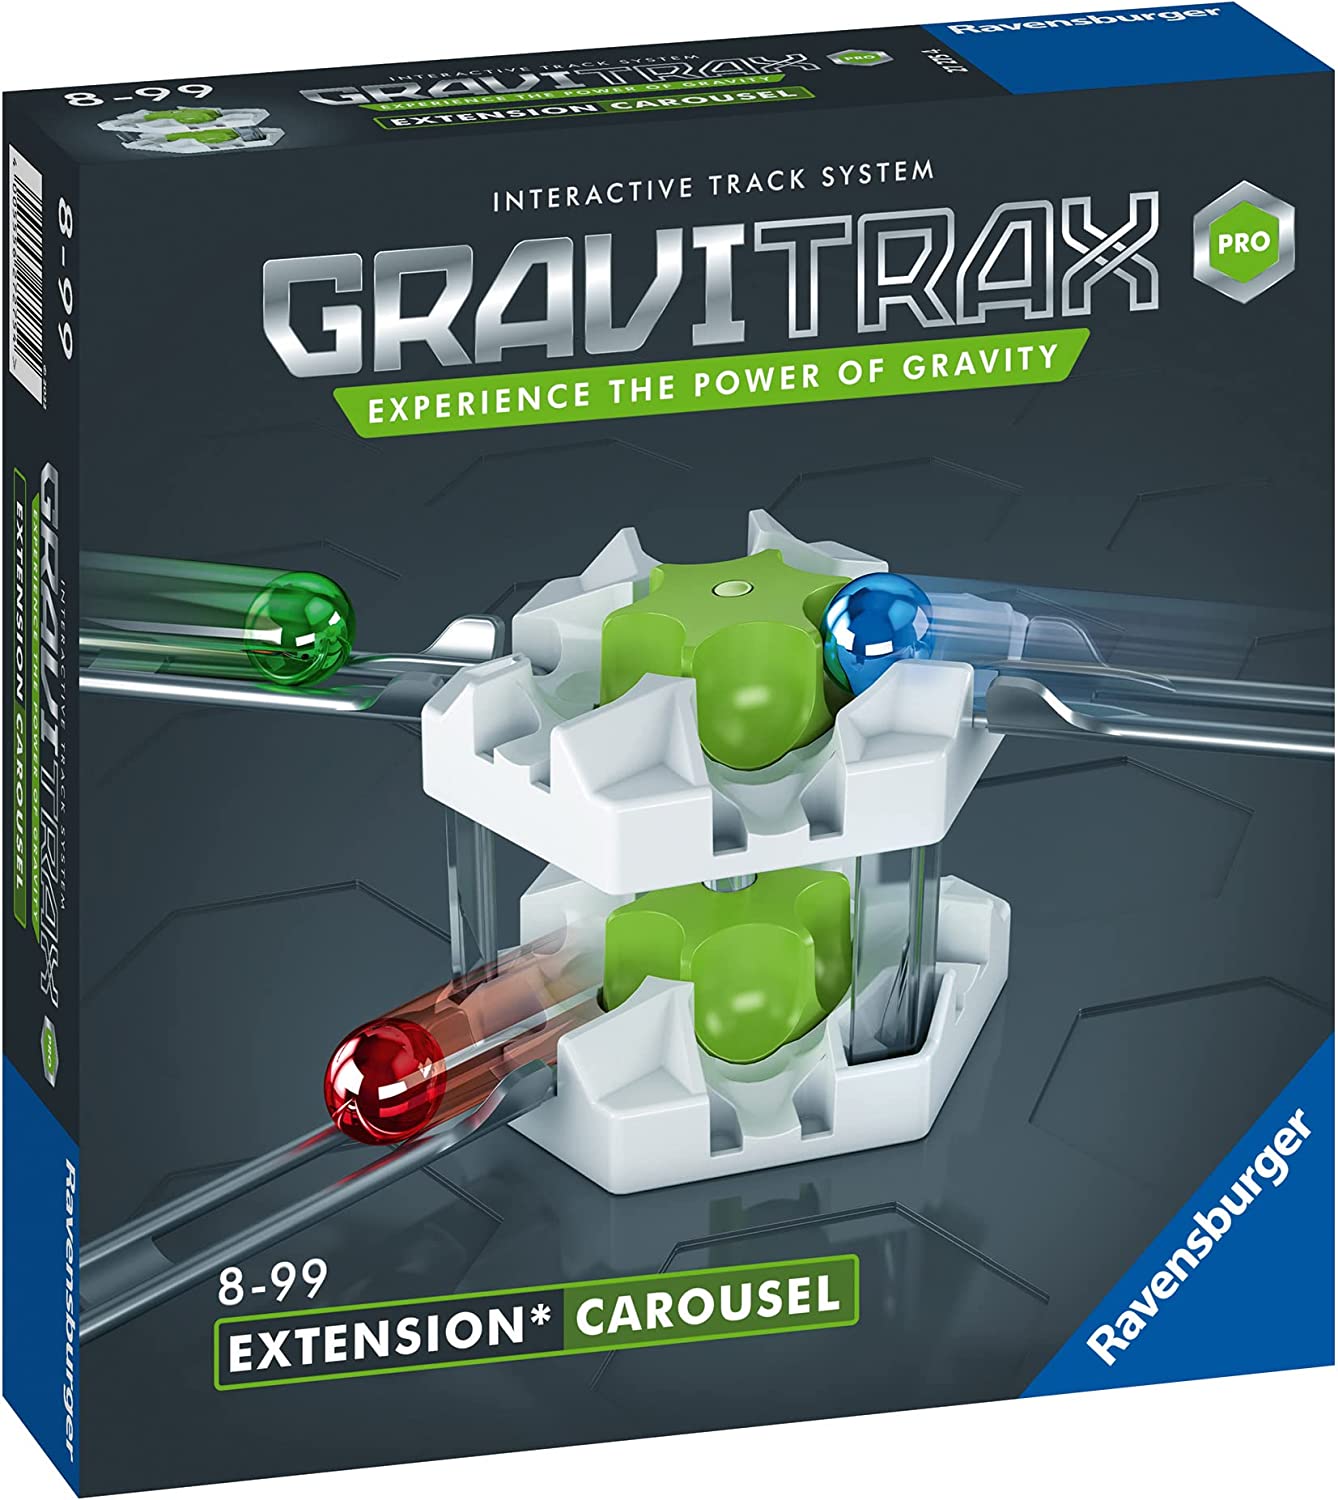 GraviTrax Pro Extension Carousel